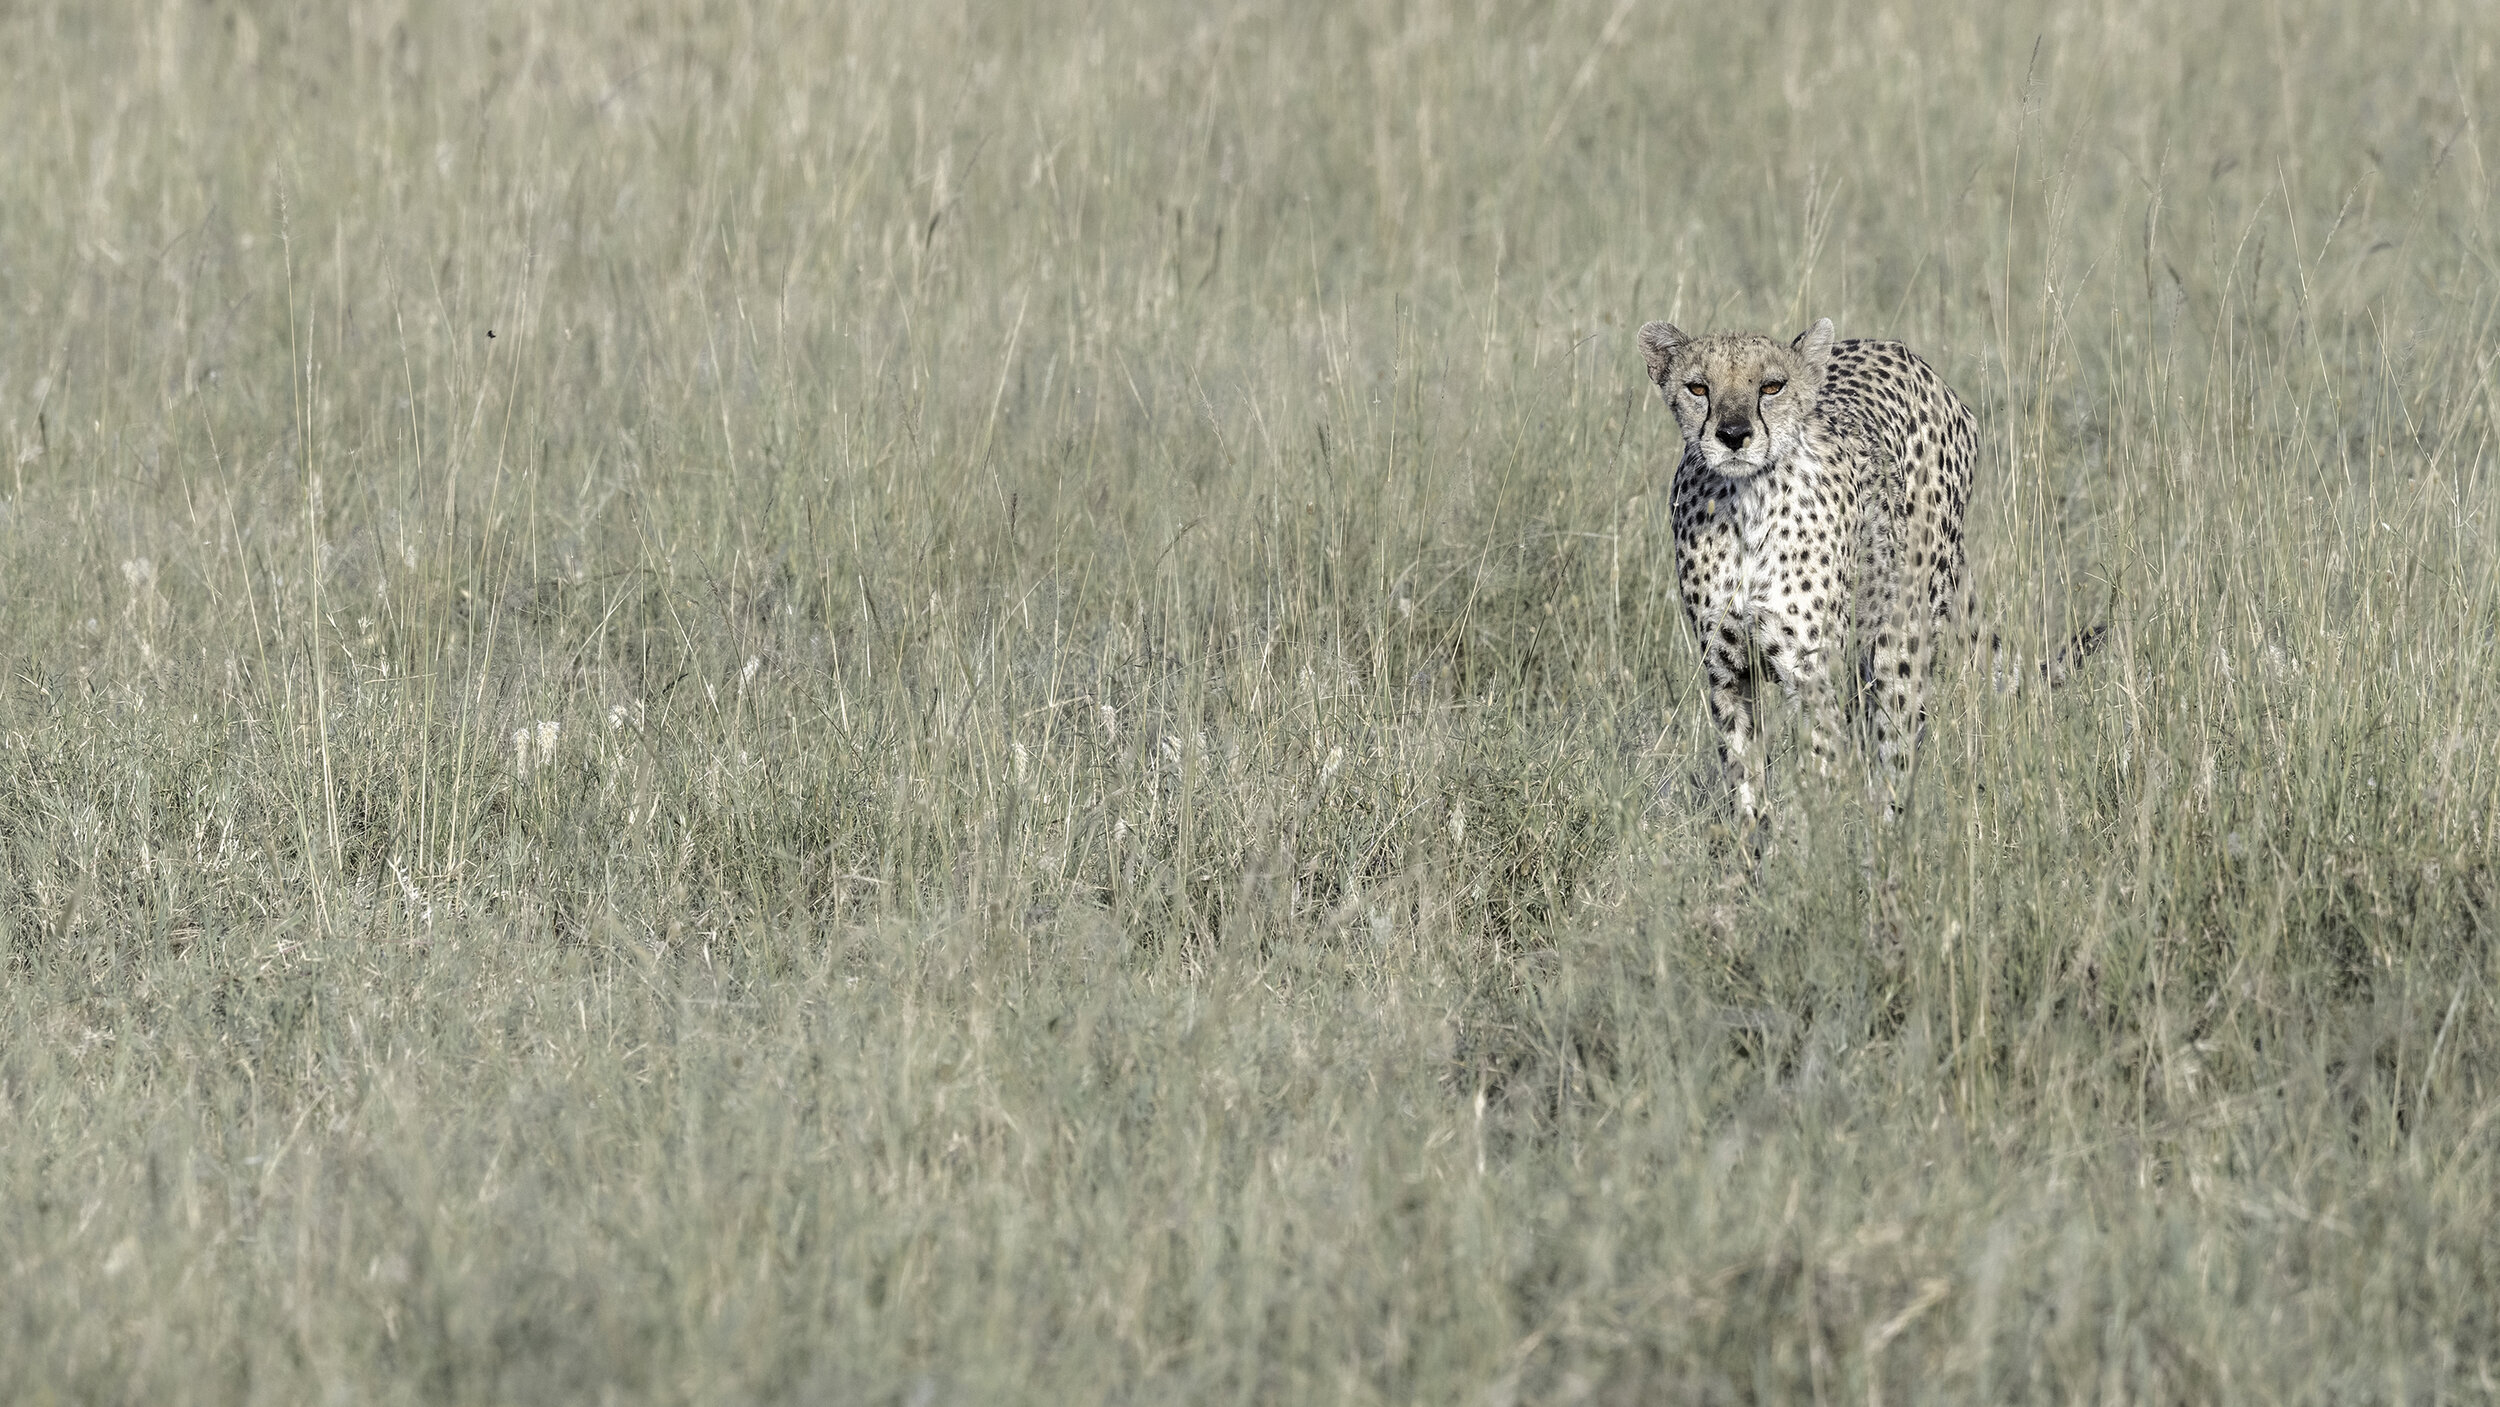 stalking cheetah.JPG